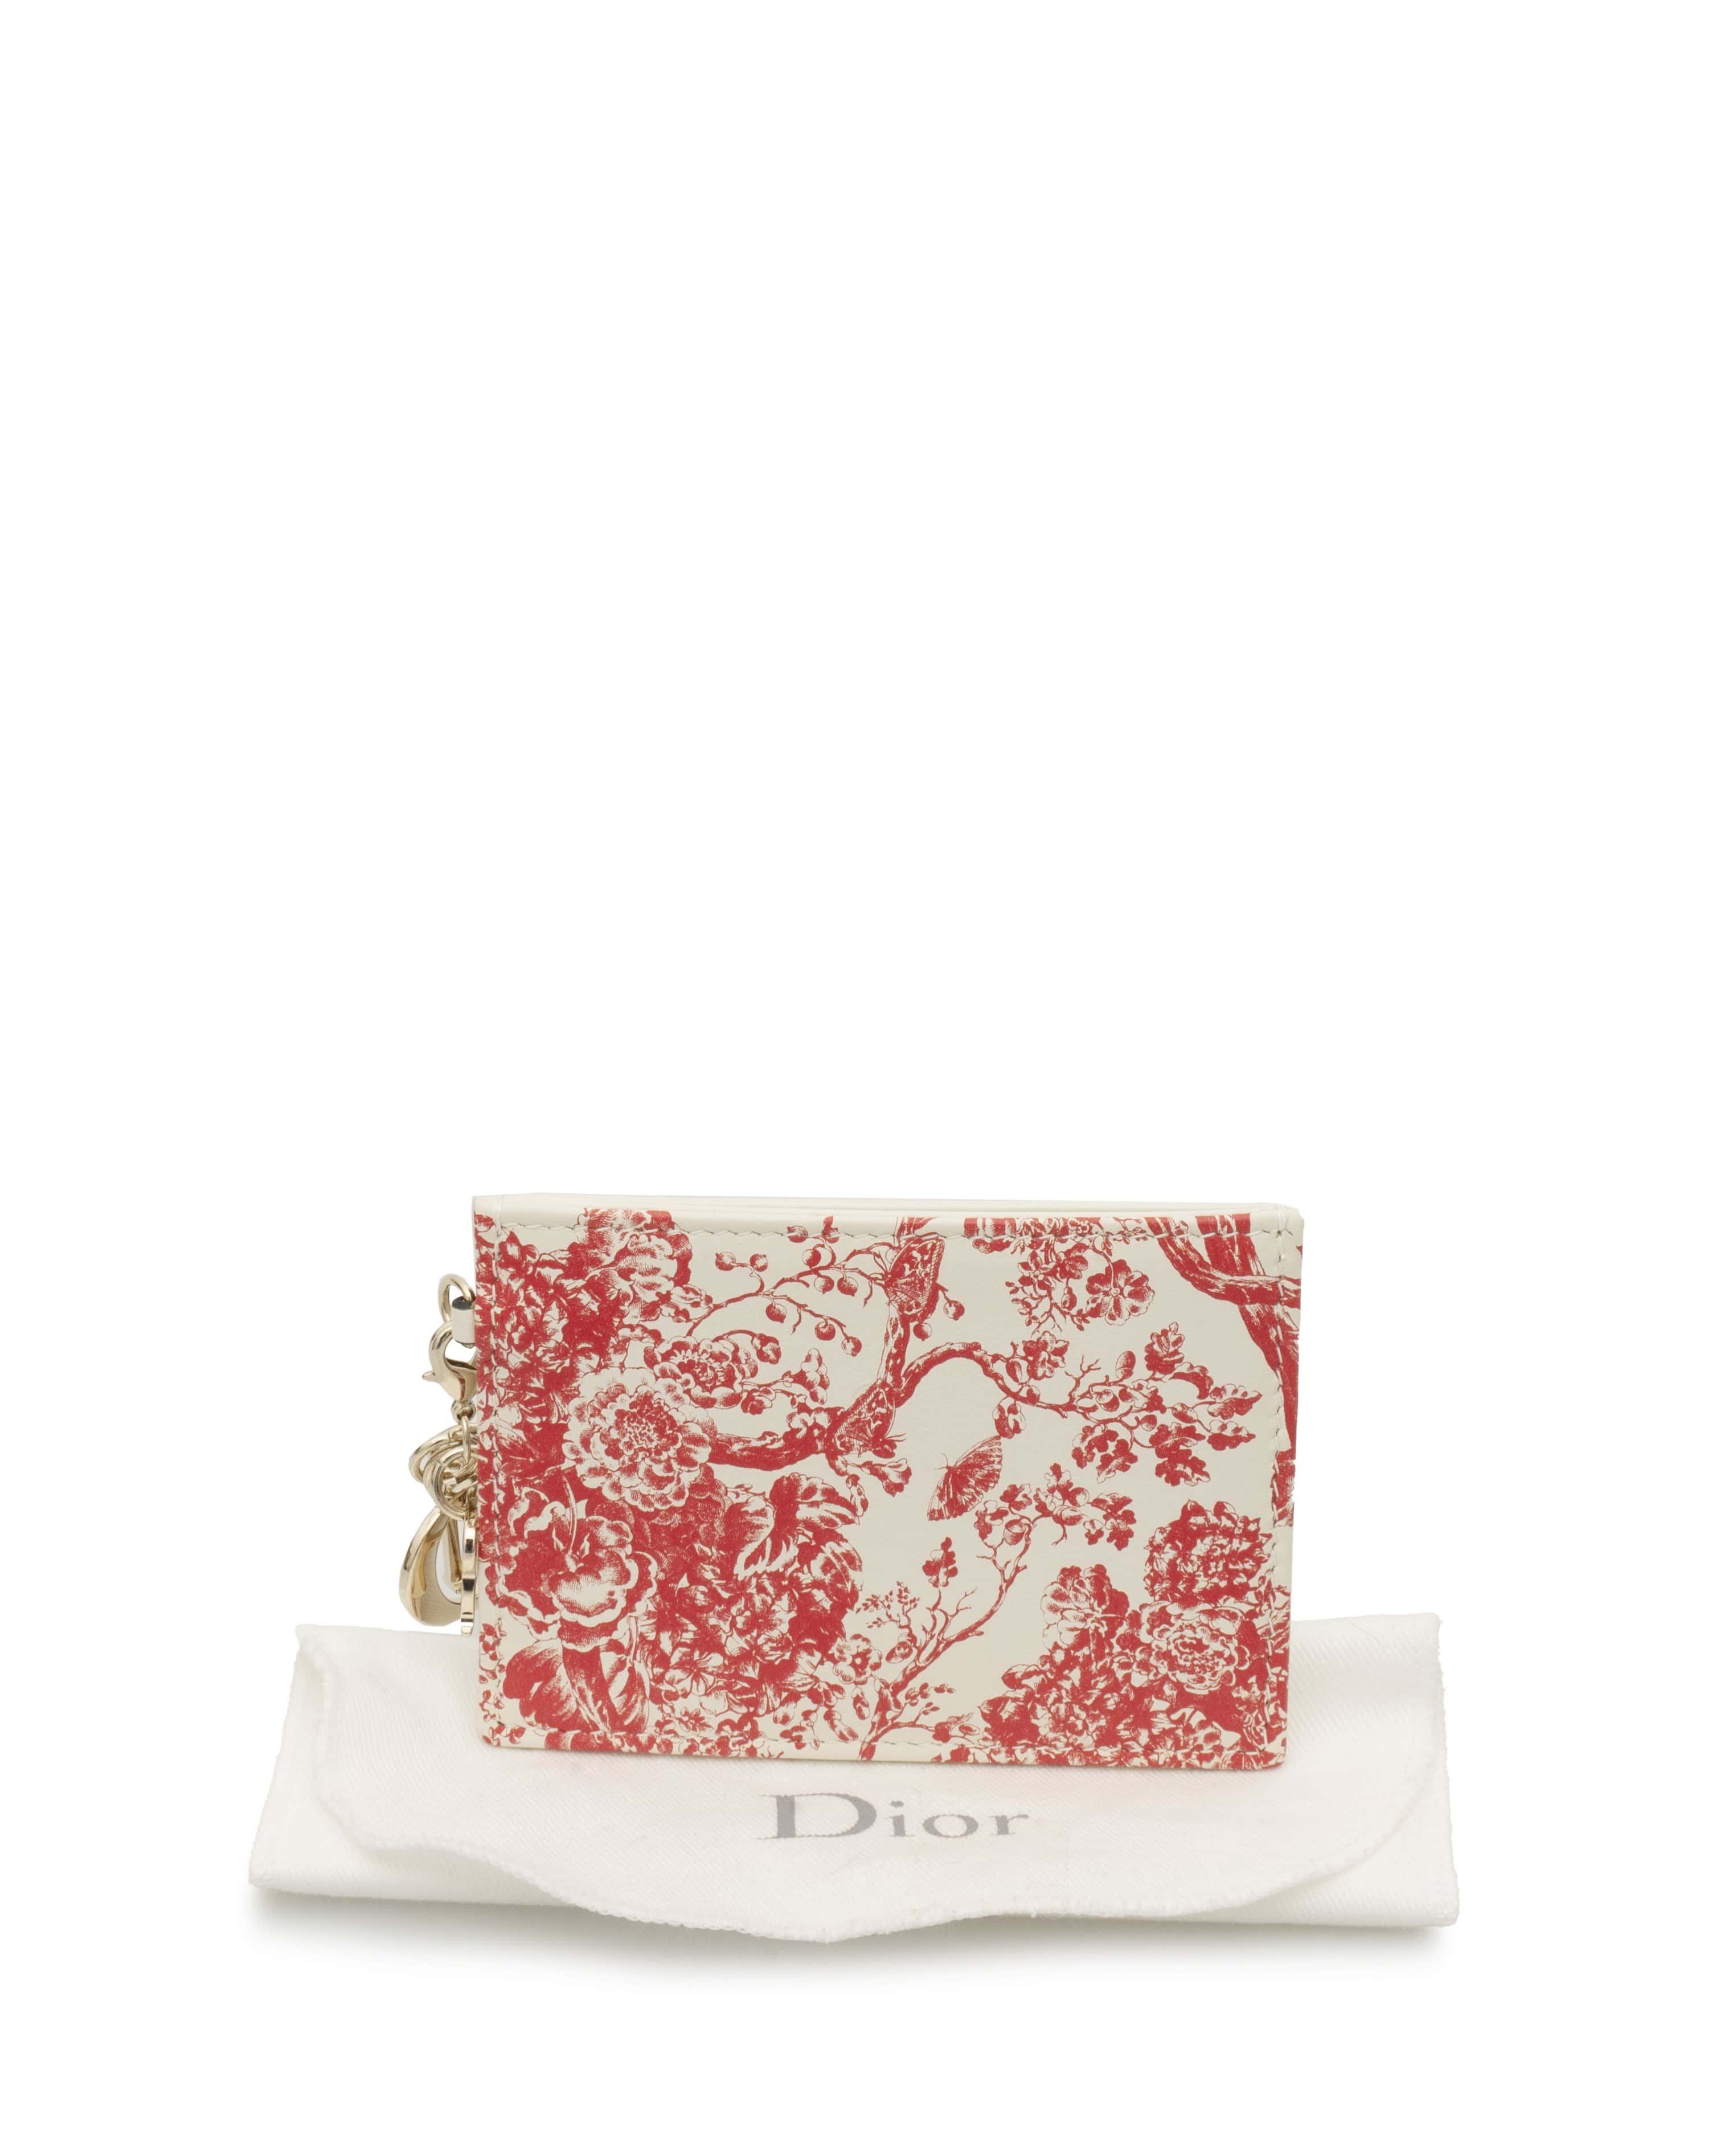 Christian Dior Dior Red White Cardholder RJL1271